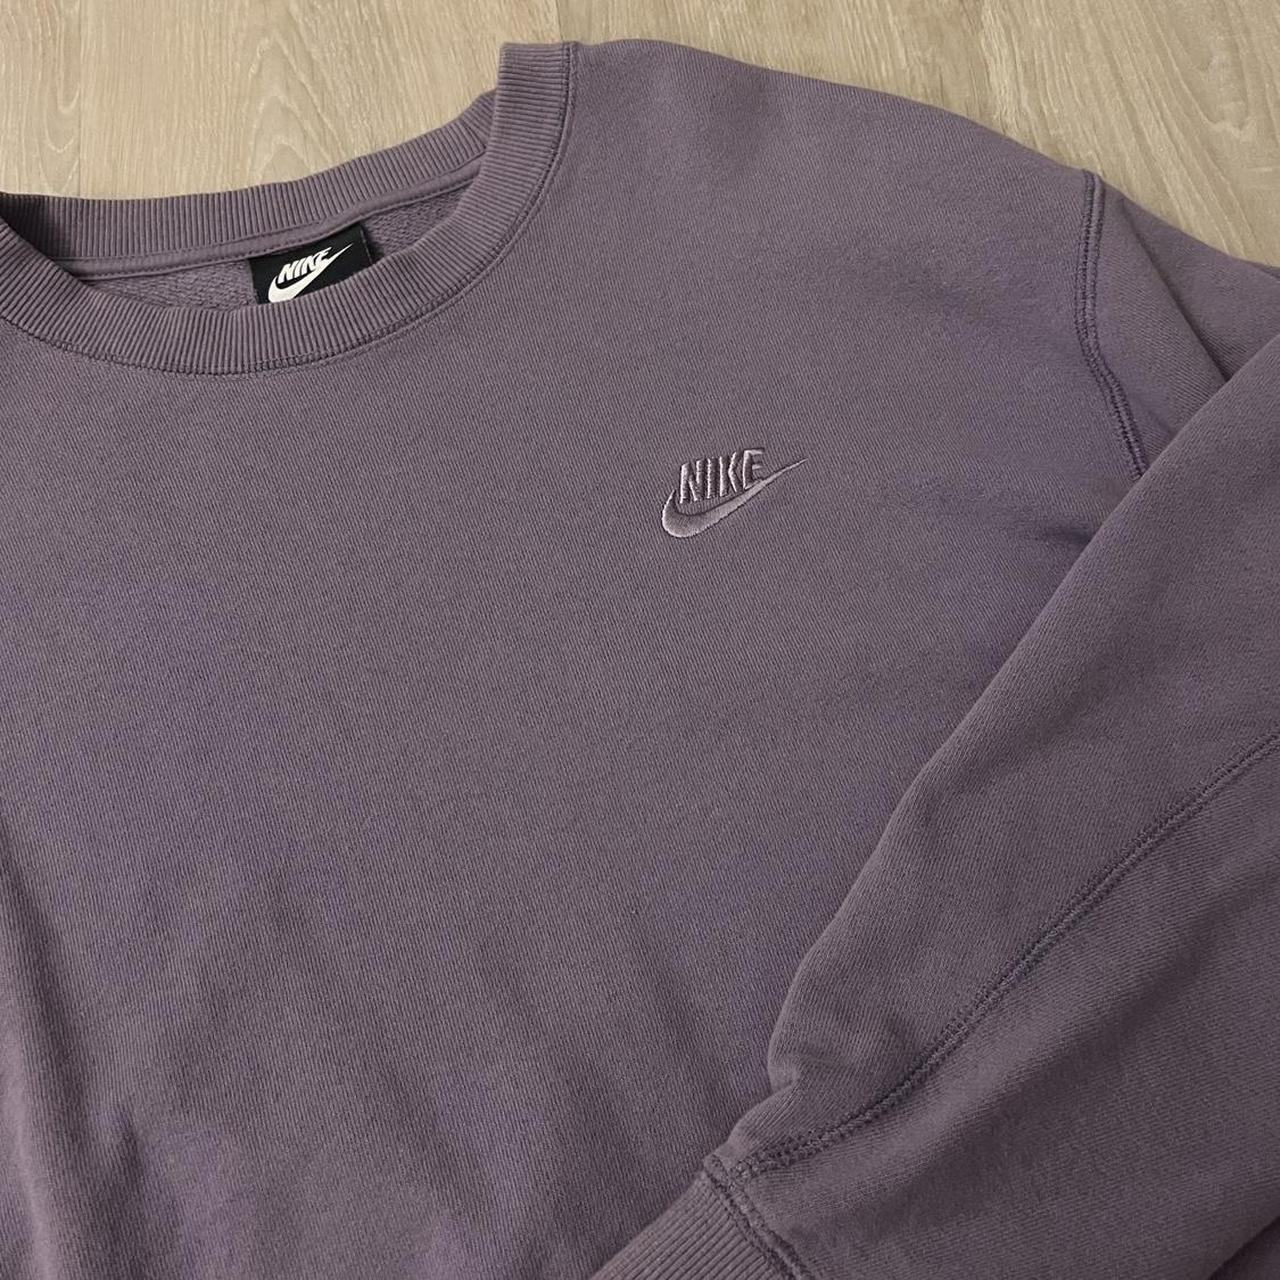 Purple Nike Sweatshirt💜 Fits like a size Medium for... - Depop